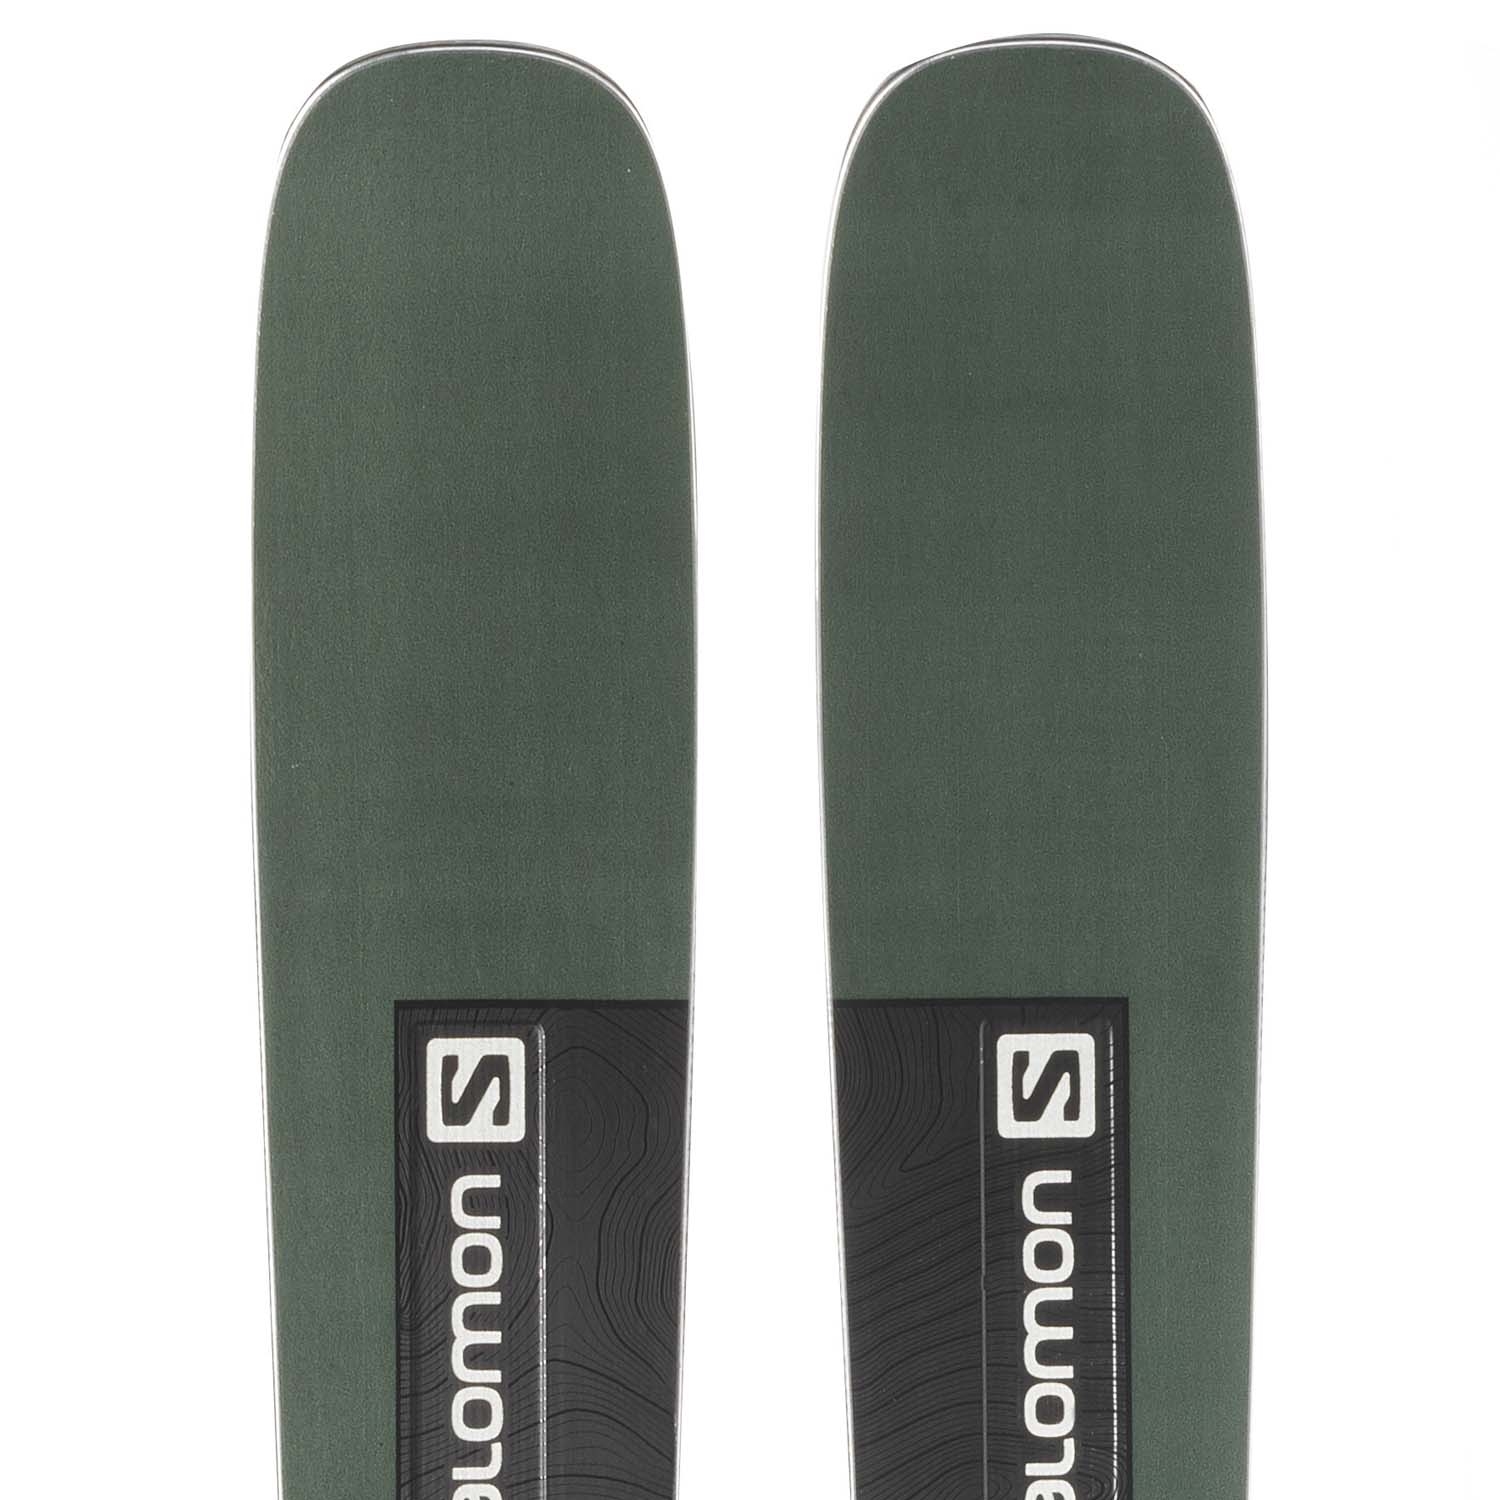 Salomon Stance 90 Skis 2022